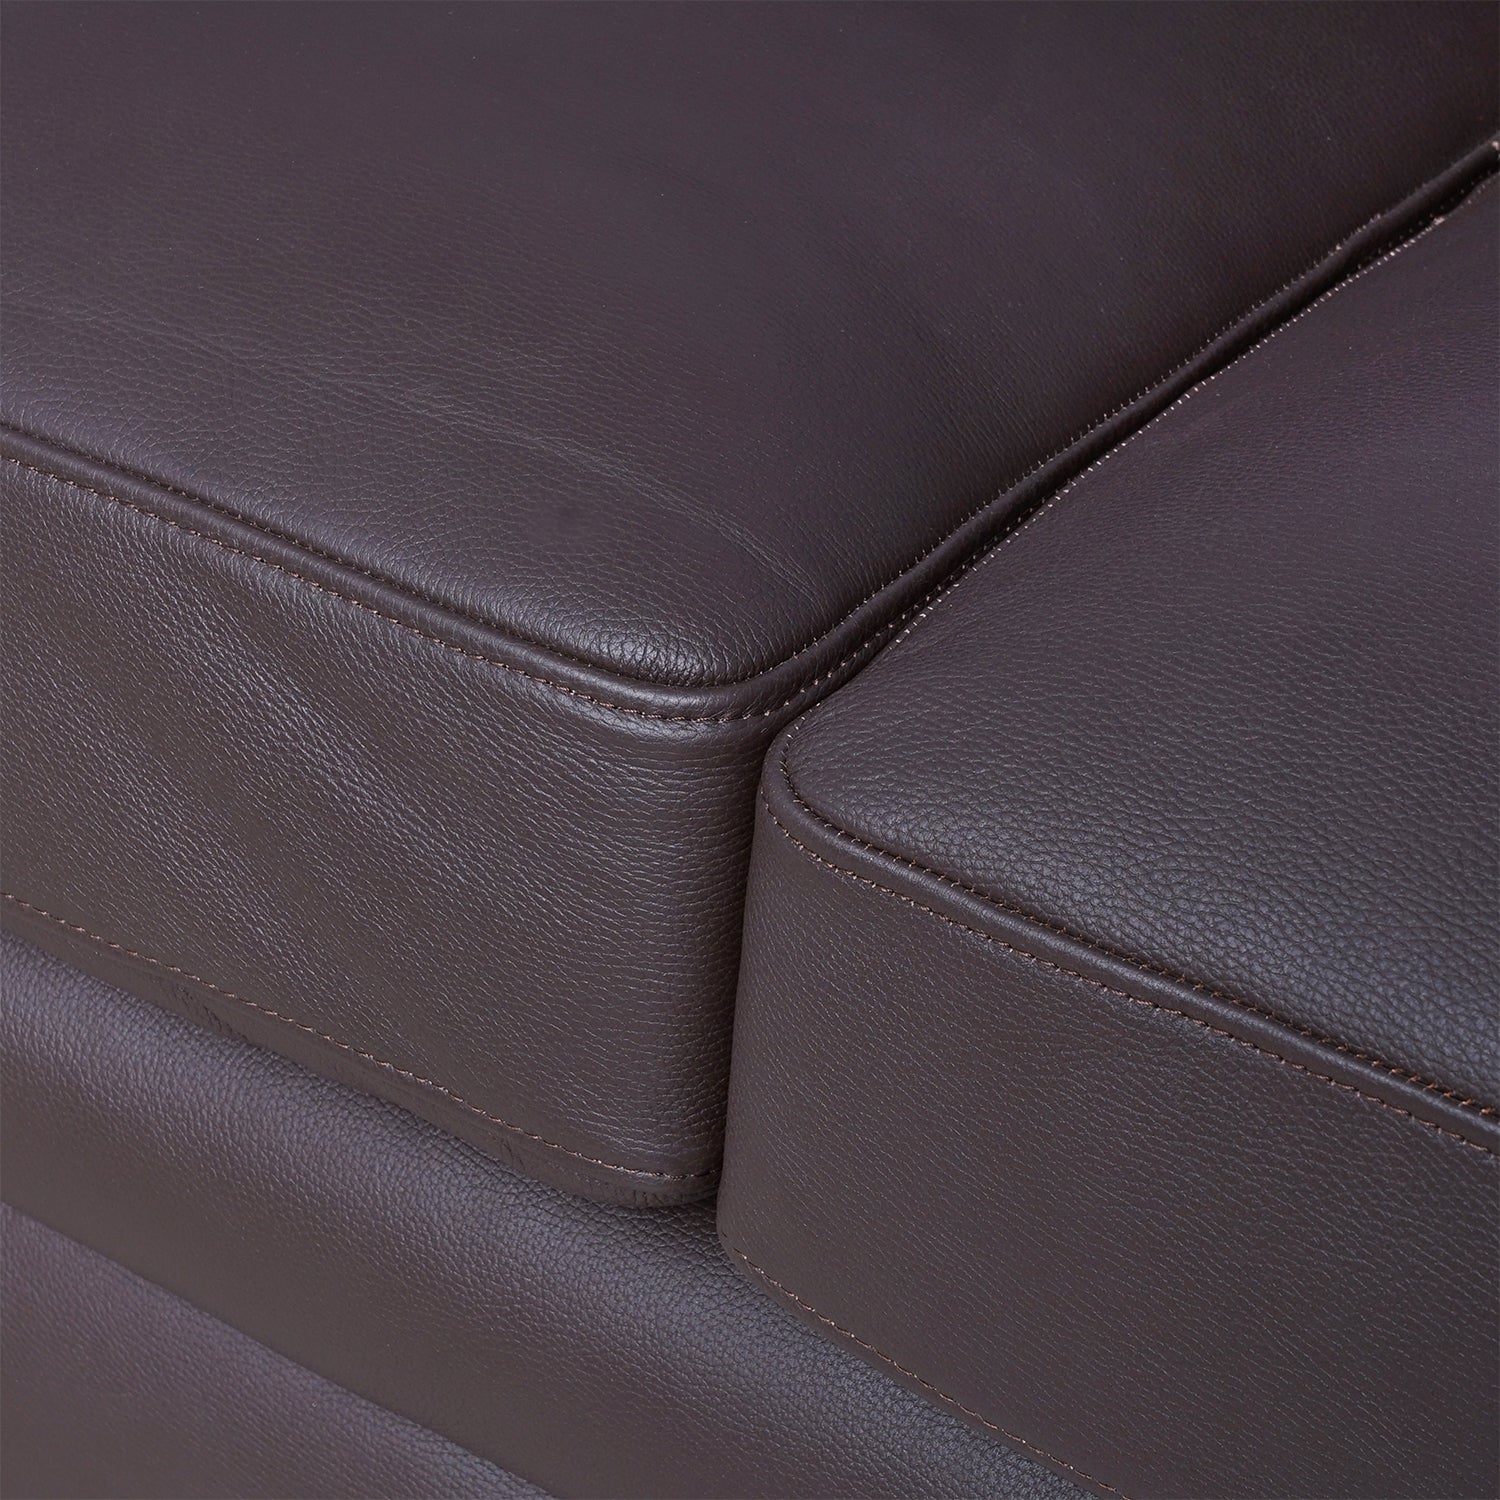 Dumond Lear Leather Sofa Umber Close Up Seat Cushion